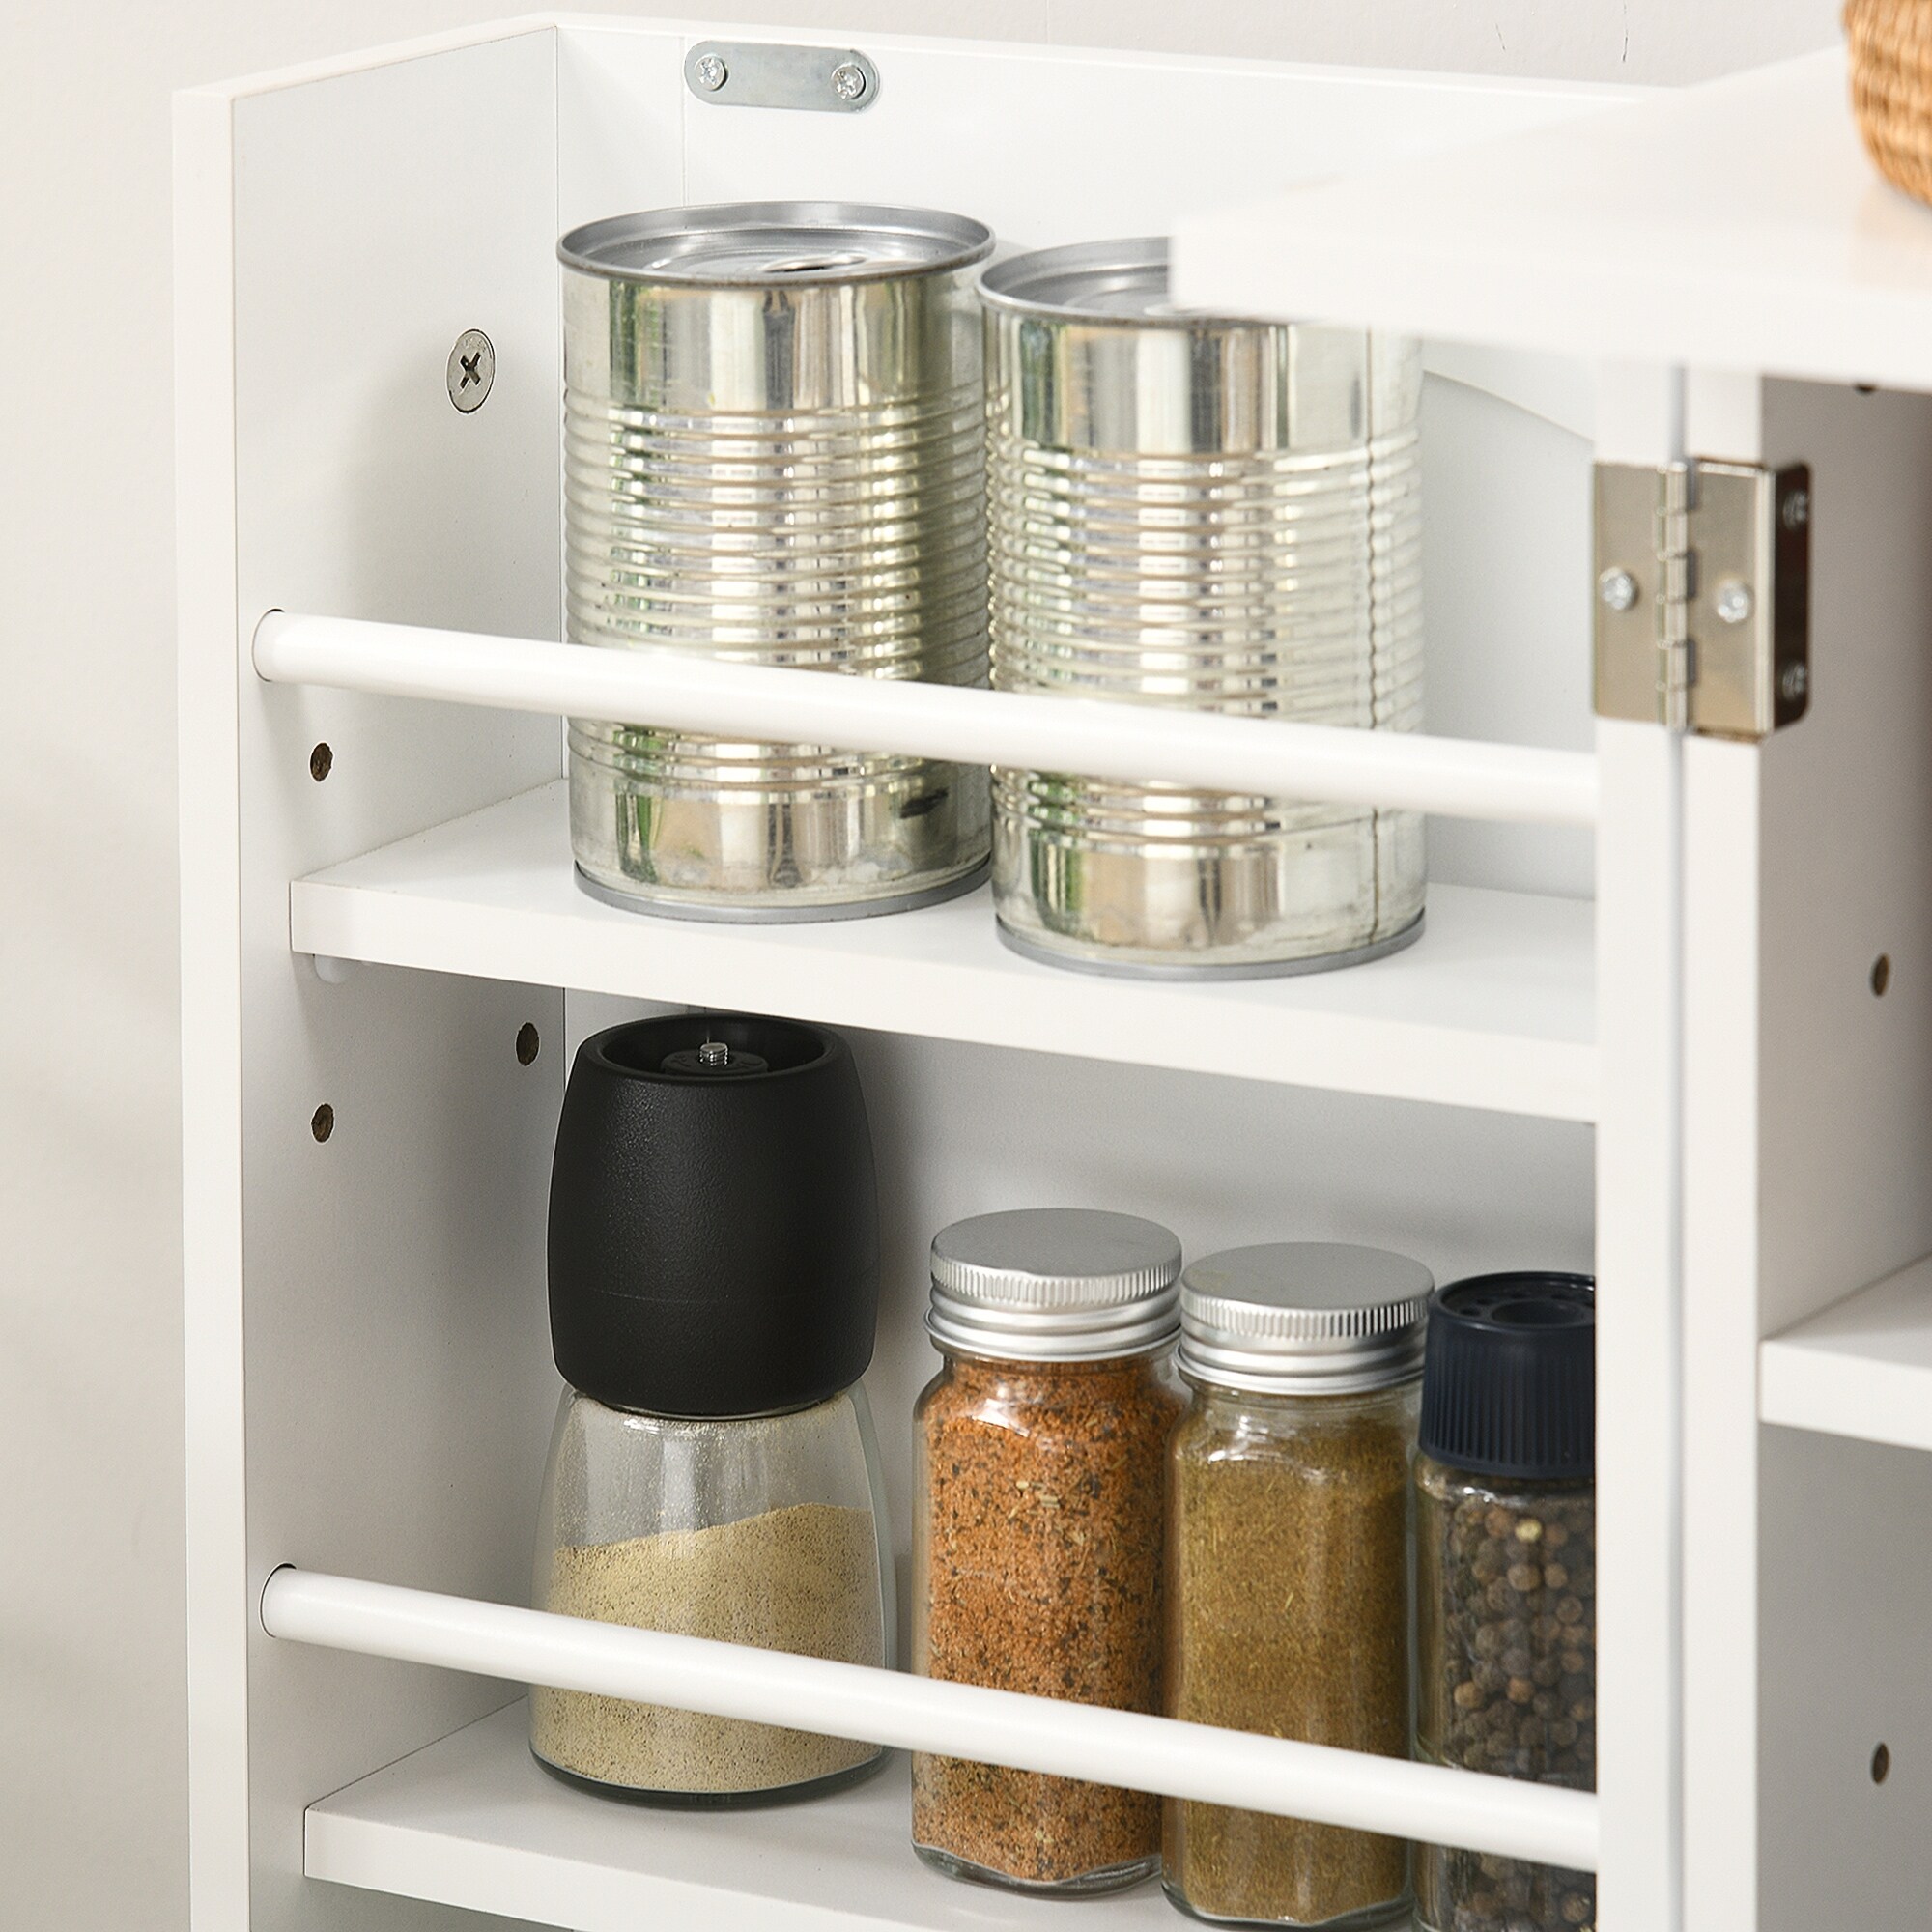 HOMCOM 41 Kitchen Pantry, Modern 2-Door Kitchen Storage Cabinet with  5-Tier Shelving, 12 Spice Racks and Adjustable Shelves, White